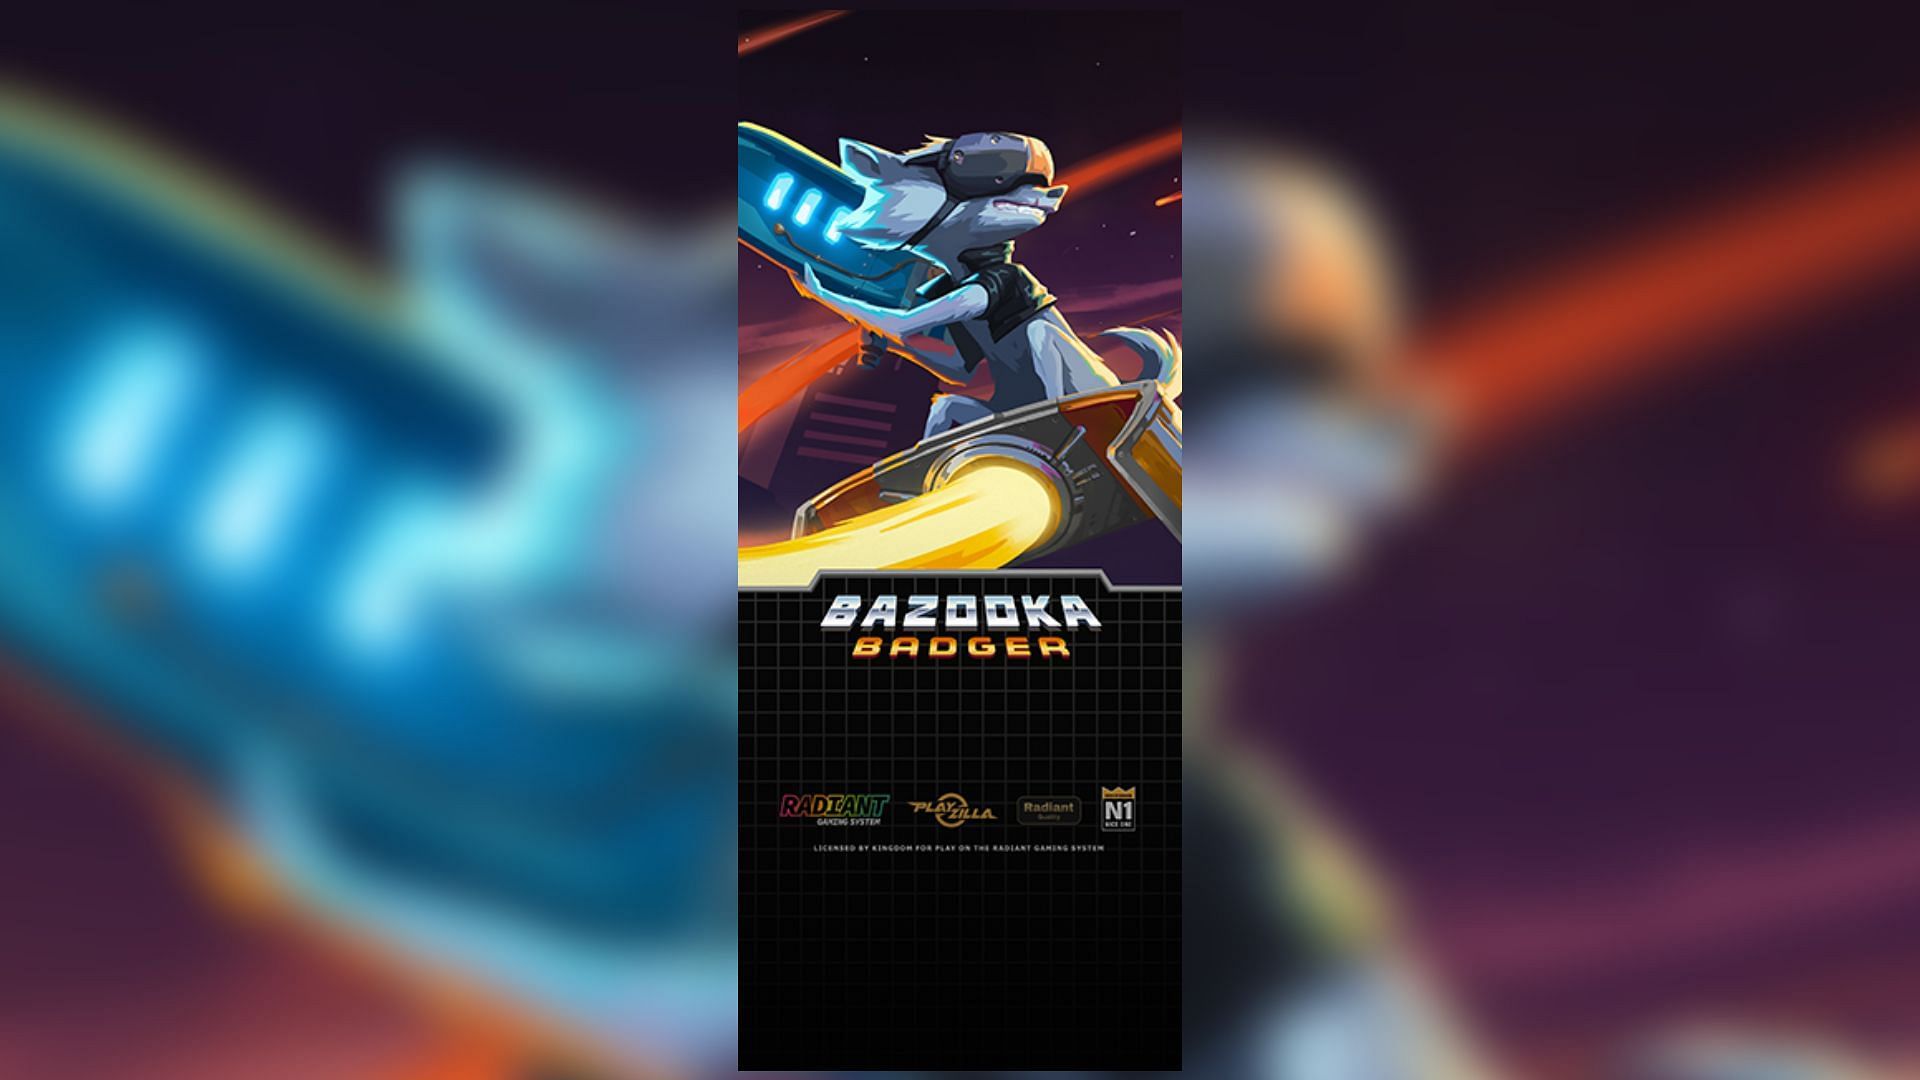 Bazooka Badger player card (Image via Riot Games)